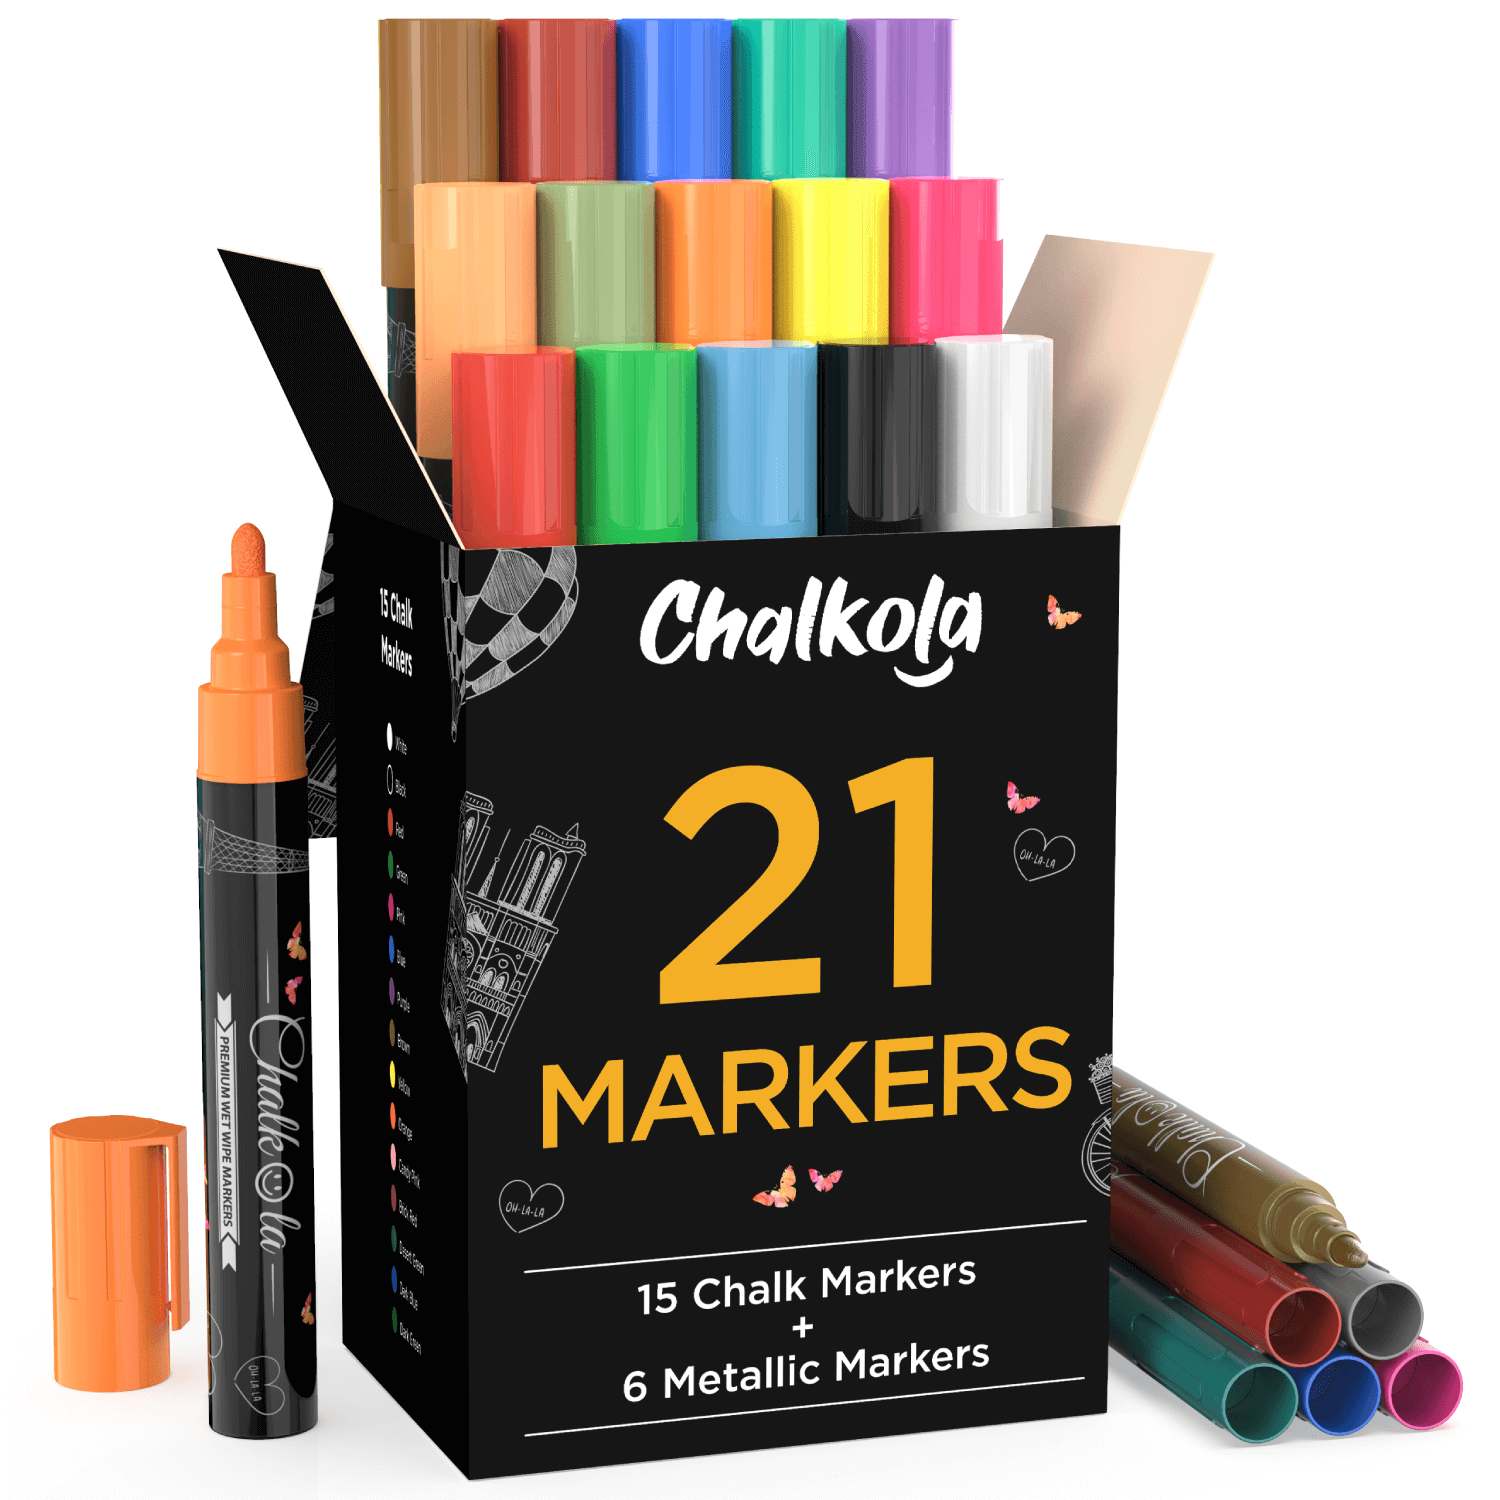 Creatov Liquid Chalkboard Window Chalk Markers 12 Pack - Multi - Great Gift Idea